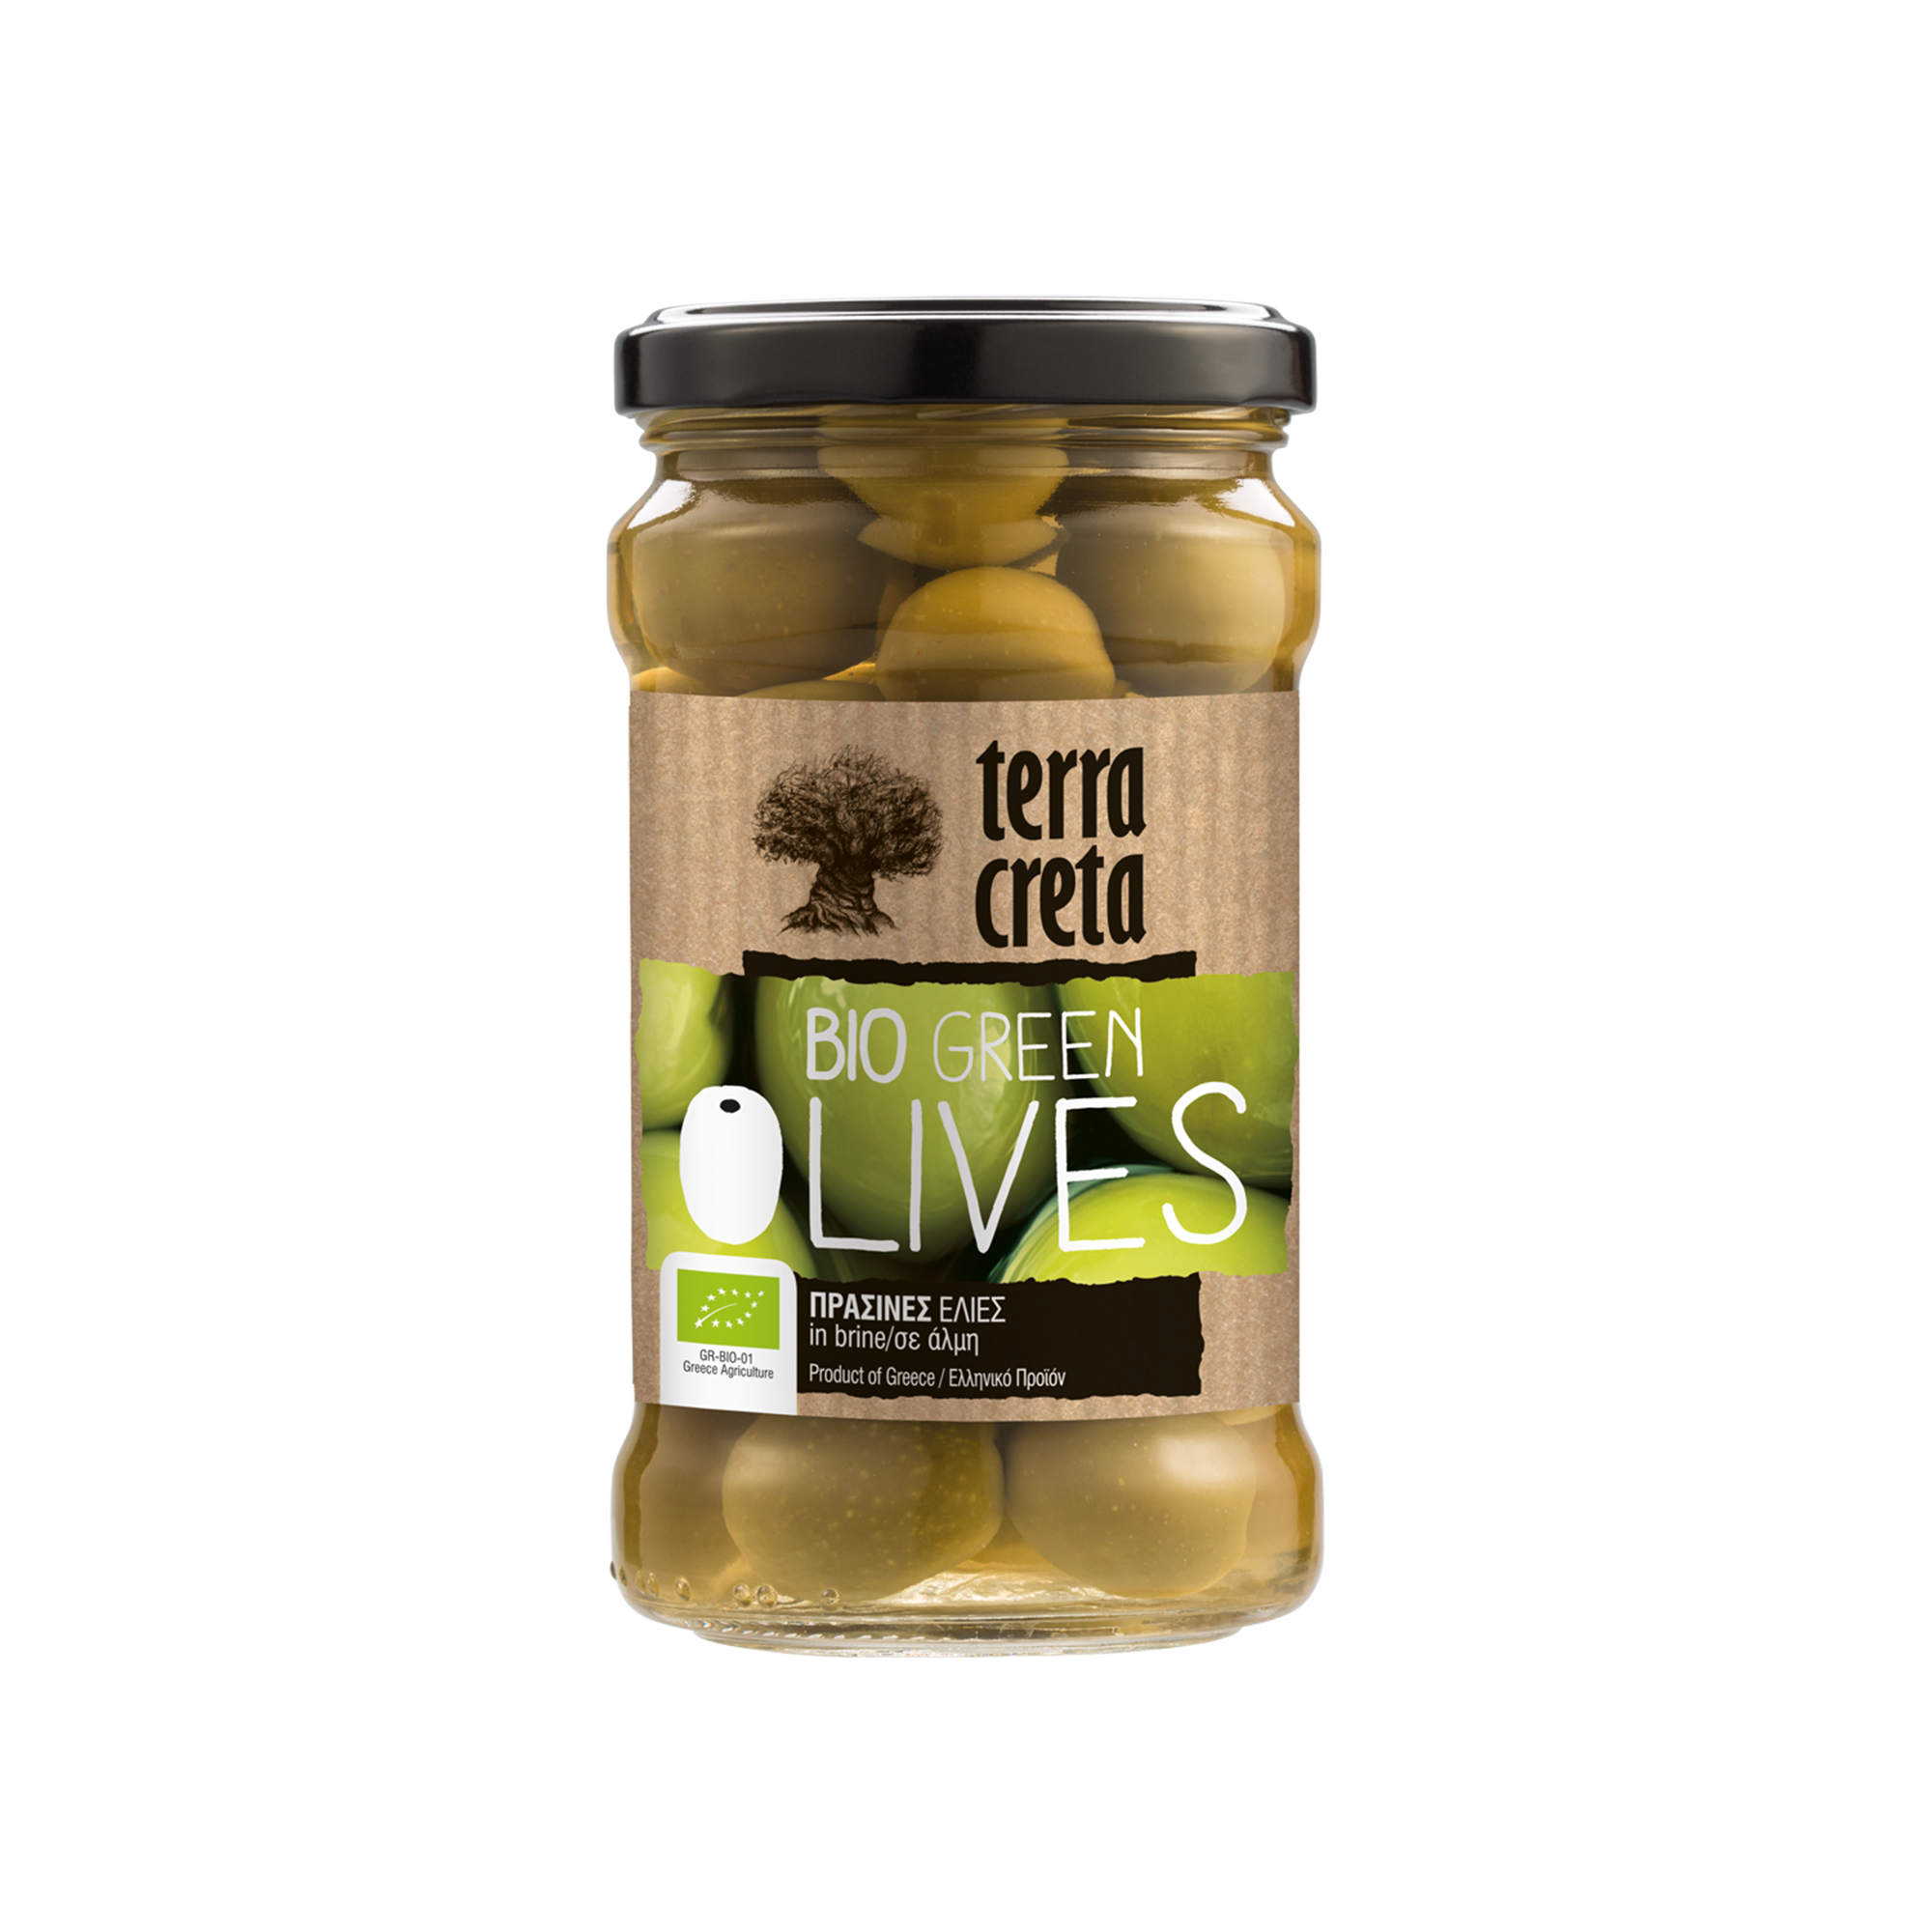 Terra Creta Bio Green Olives Greek green olives, organic in brine